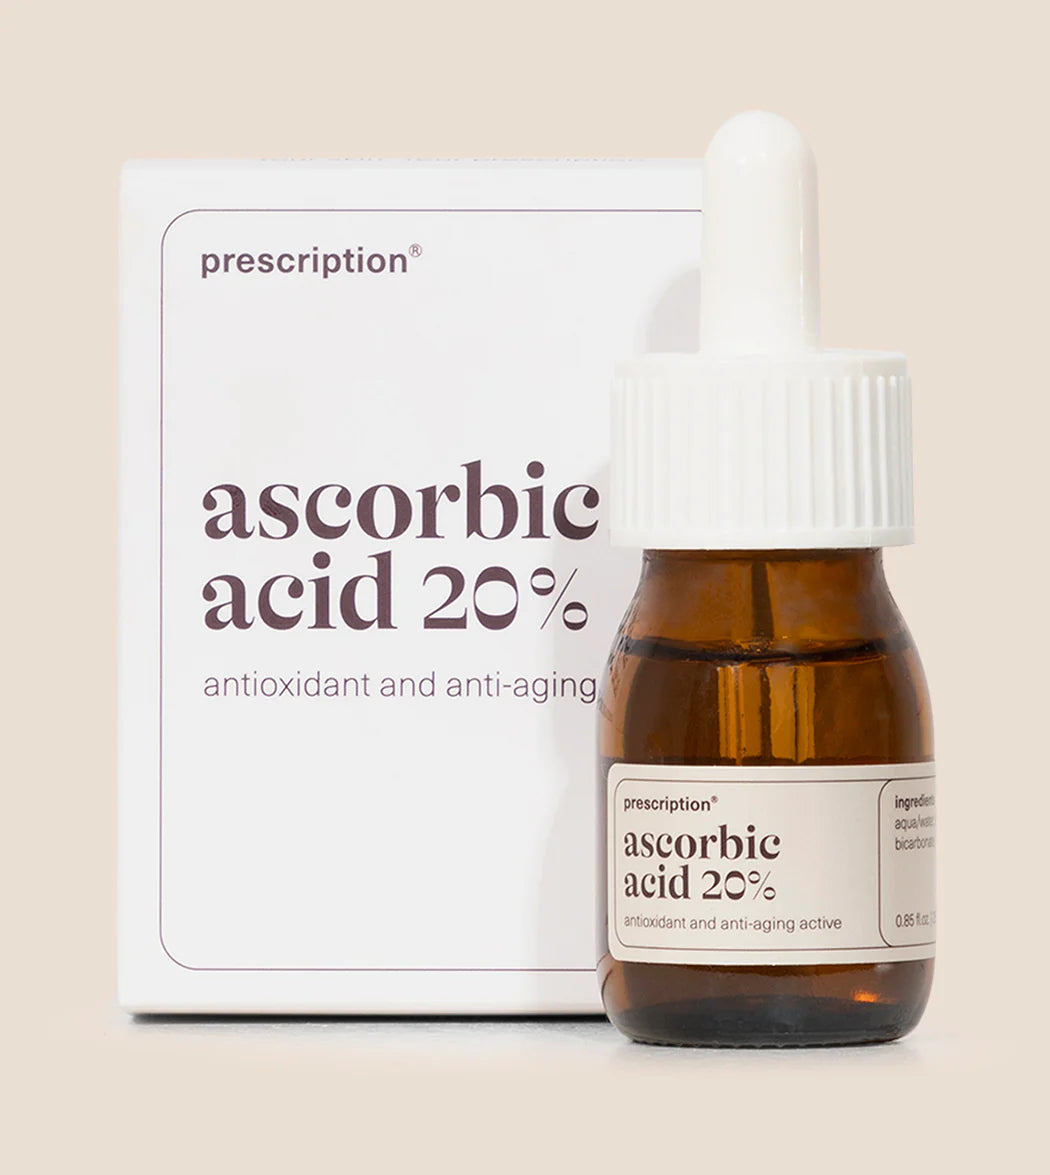 Prescription - ascorbic acid 20%